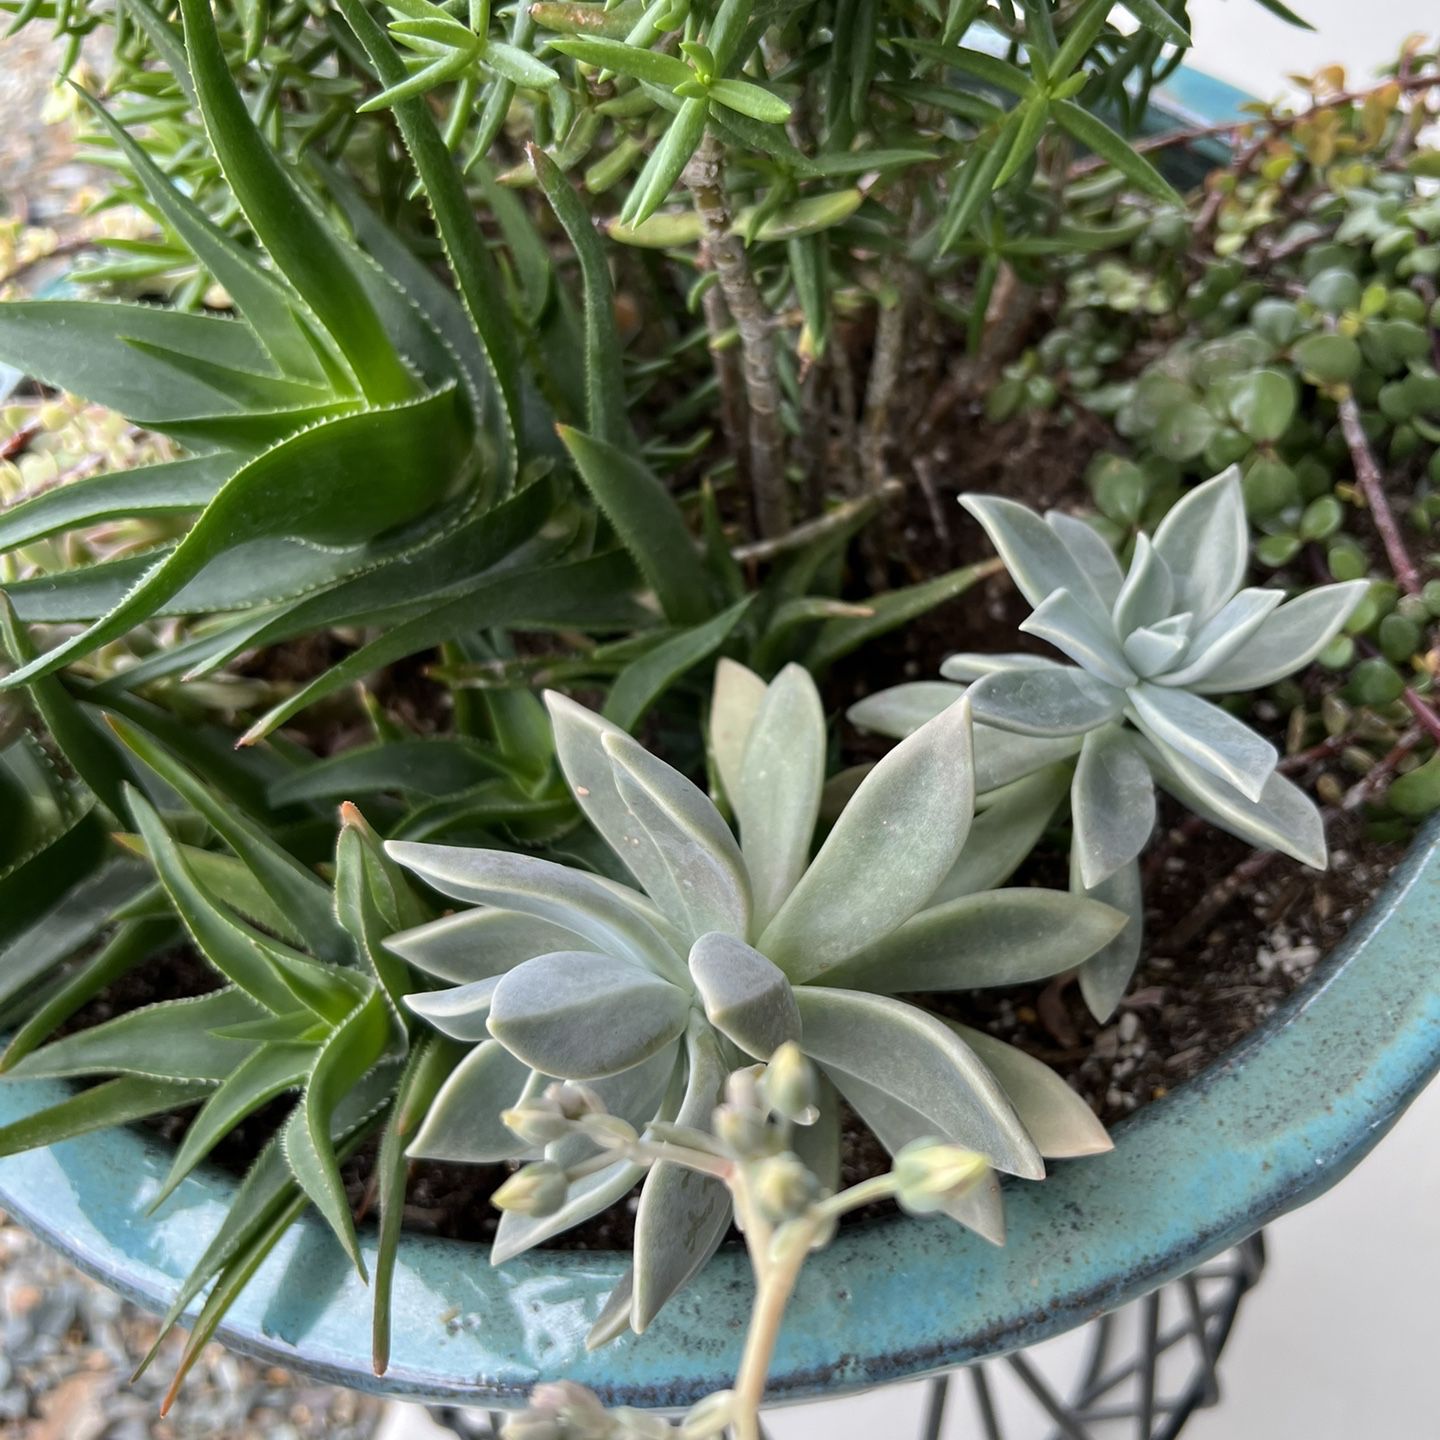 Succulent Garden Live Plants In Ceramic Teal Blue Pot.